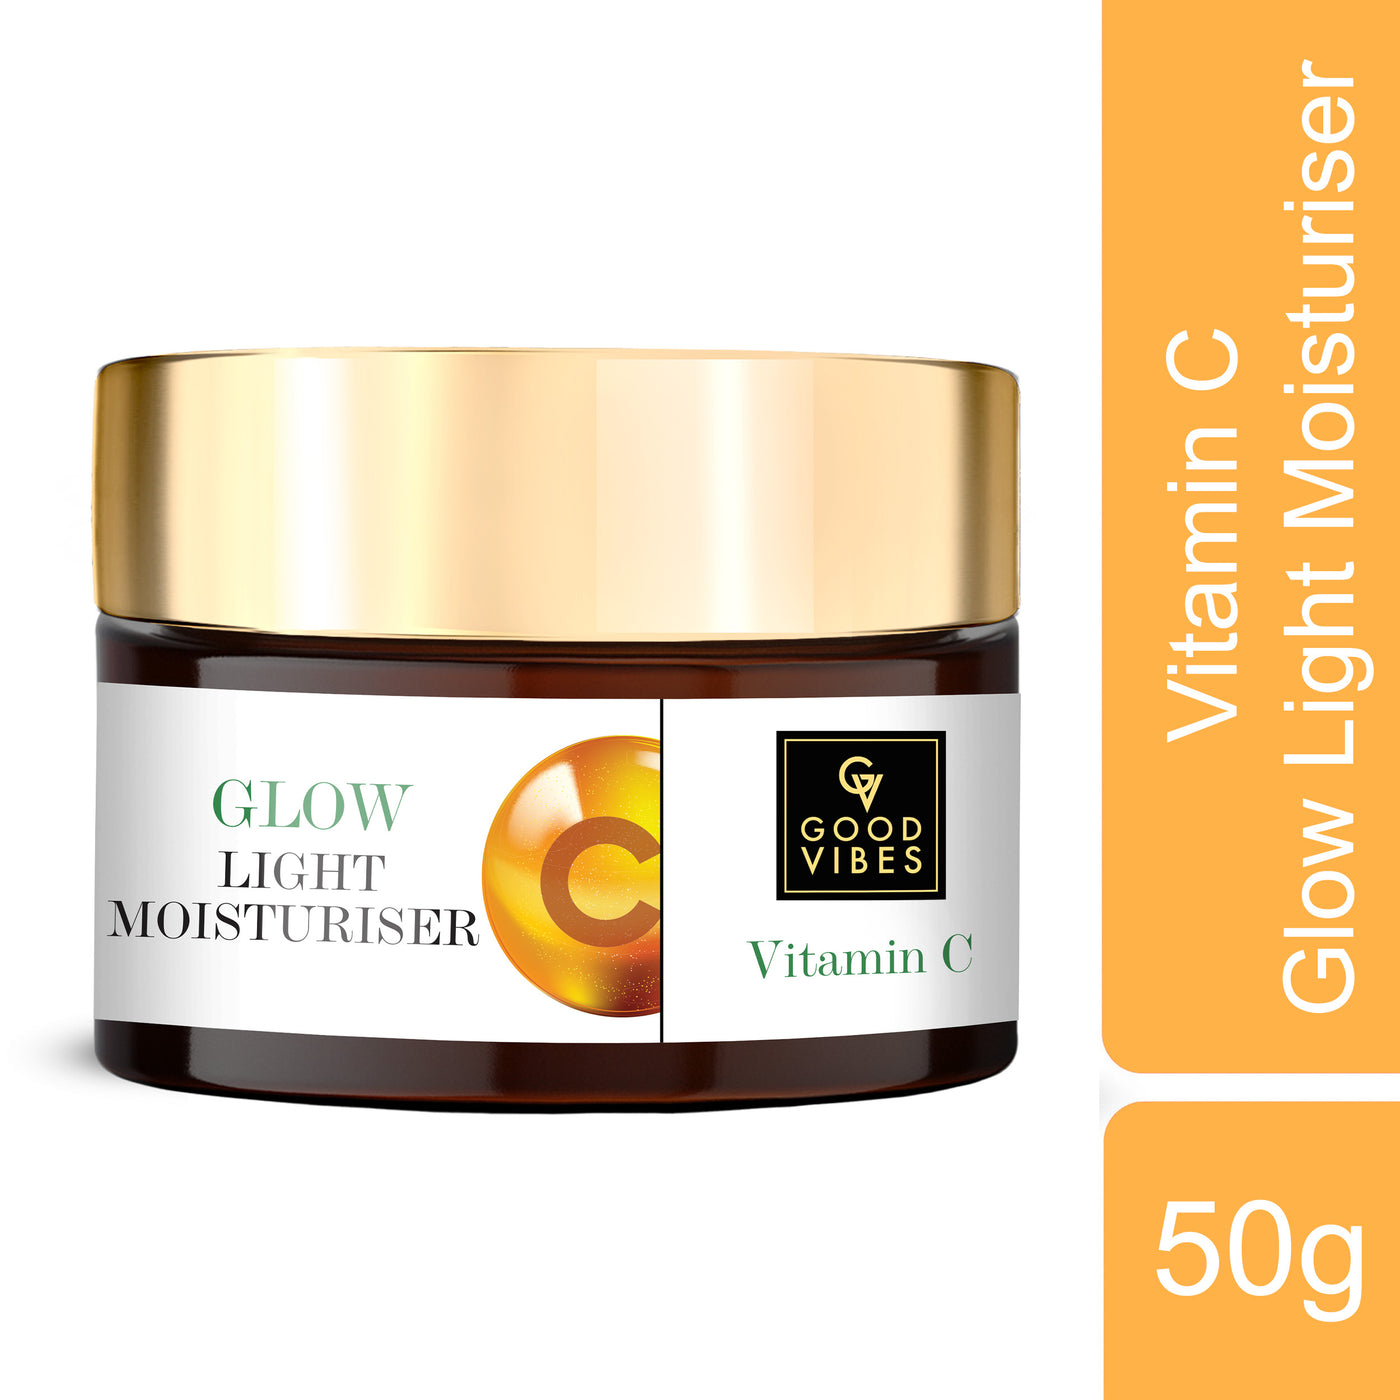 Glow Light Moisturiser - Vitamin C